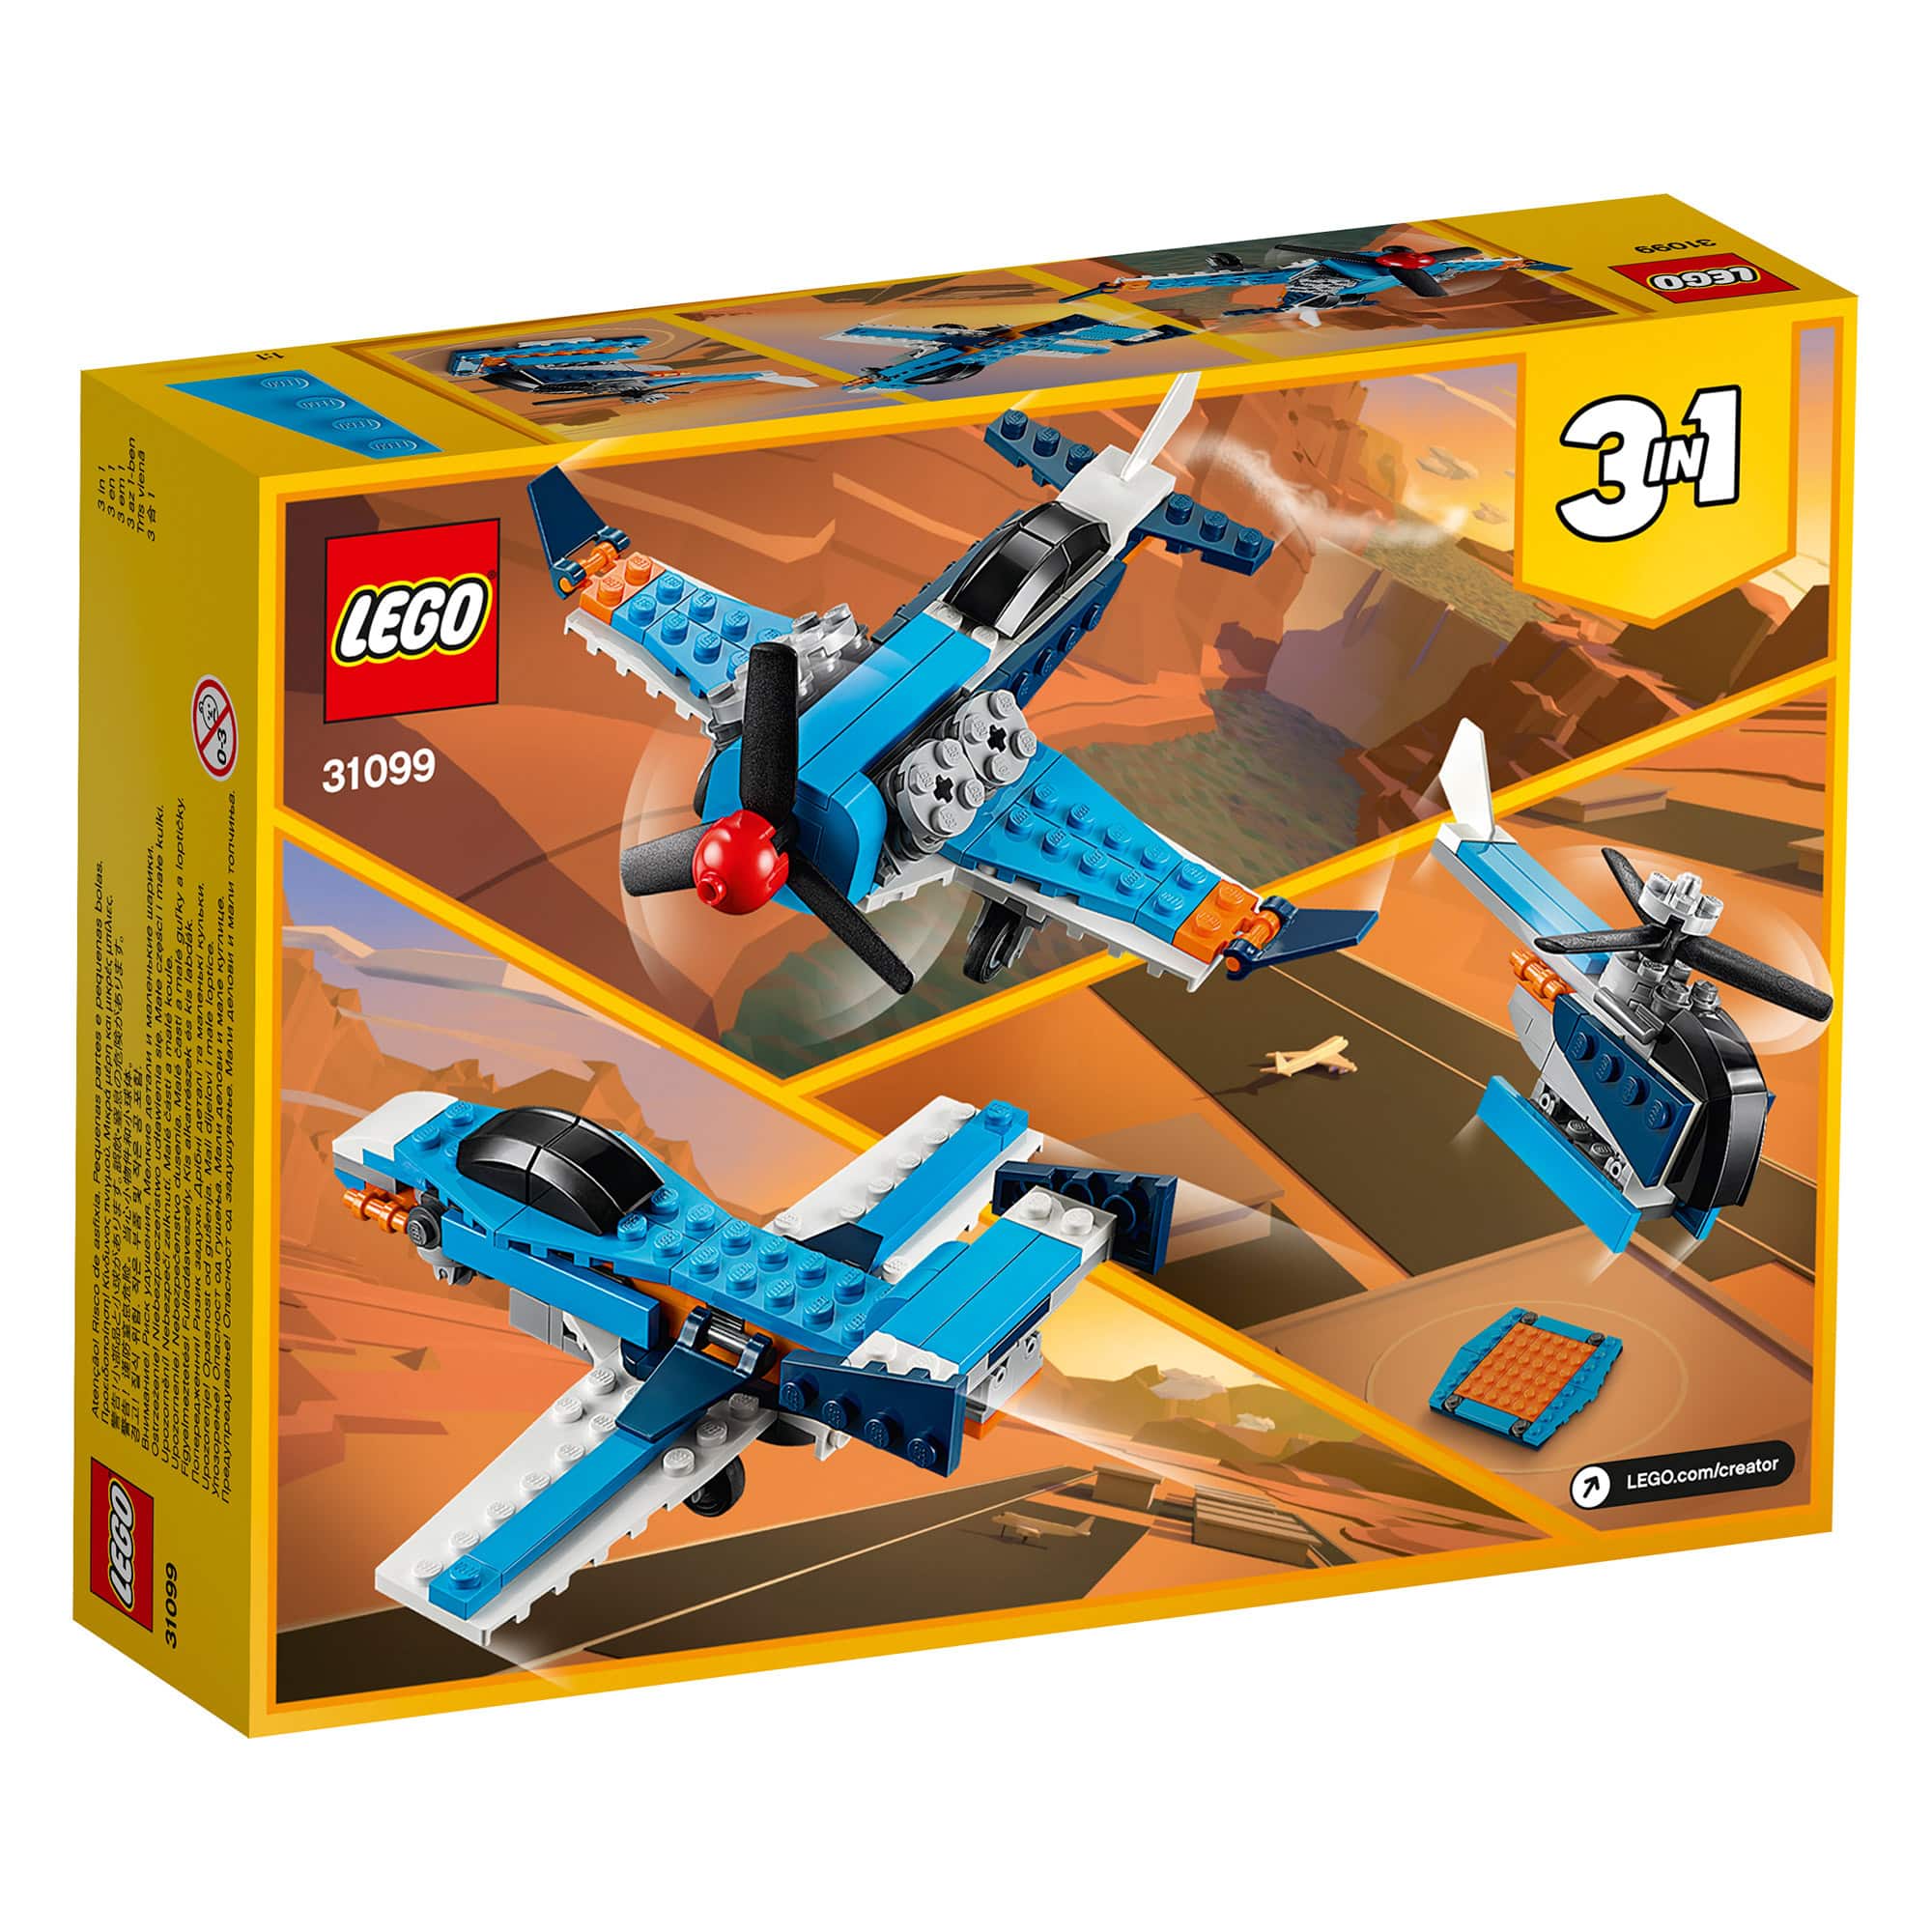 LEGO Creator 31099 - Propeller Plane